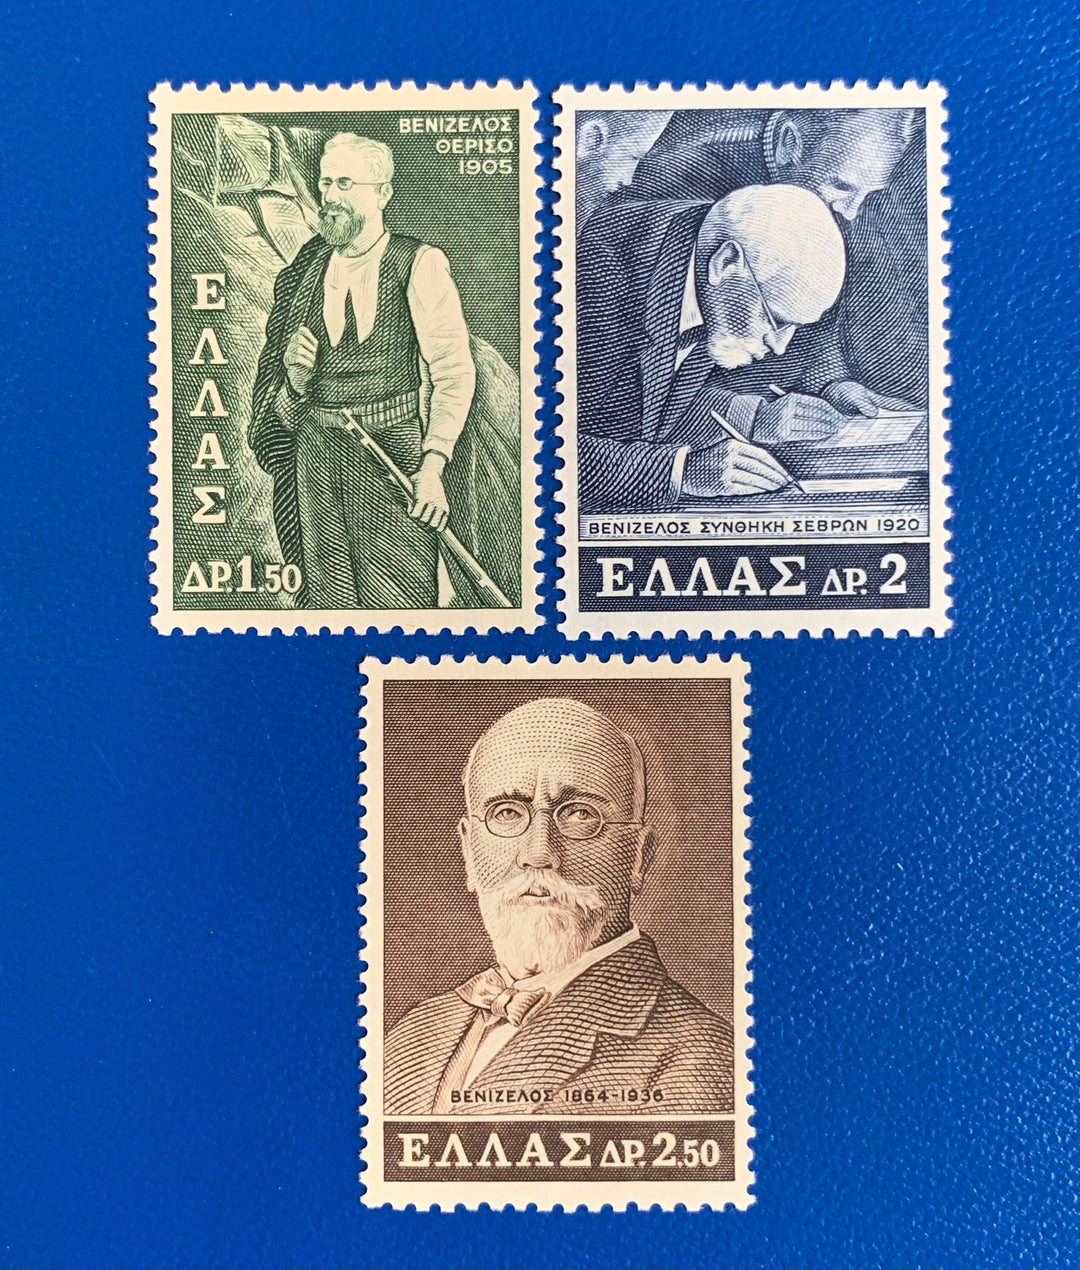 Greece - Original Vintage Postage Stamps- 1965 - E. Venizelos - for the collector, artist or crafter